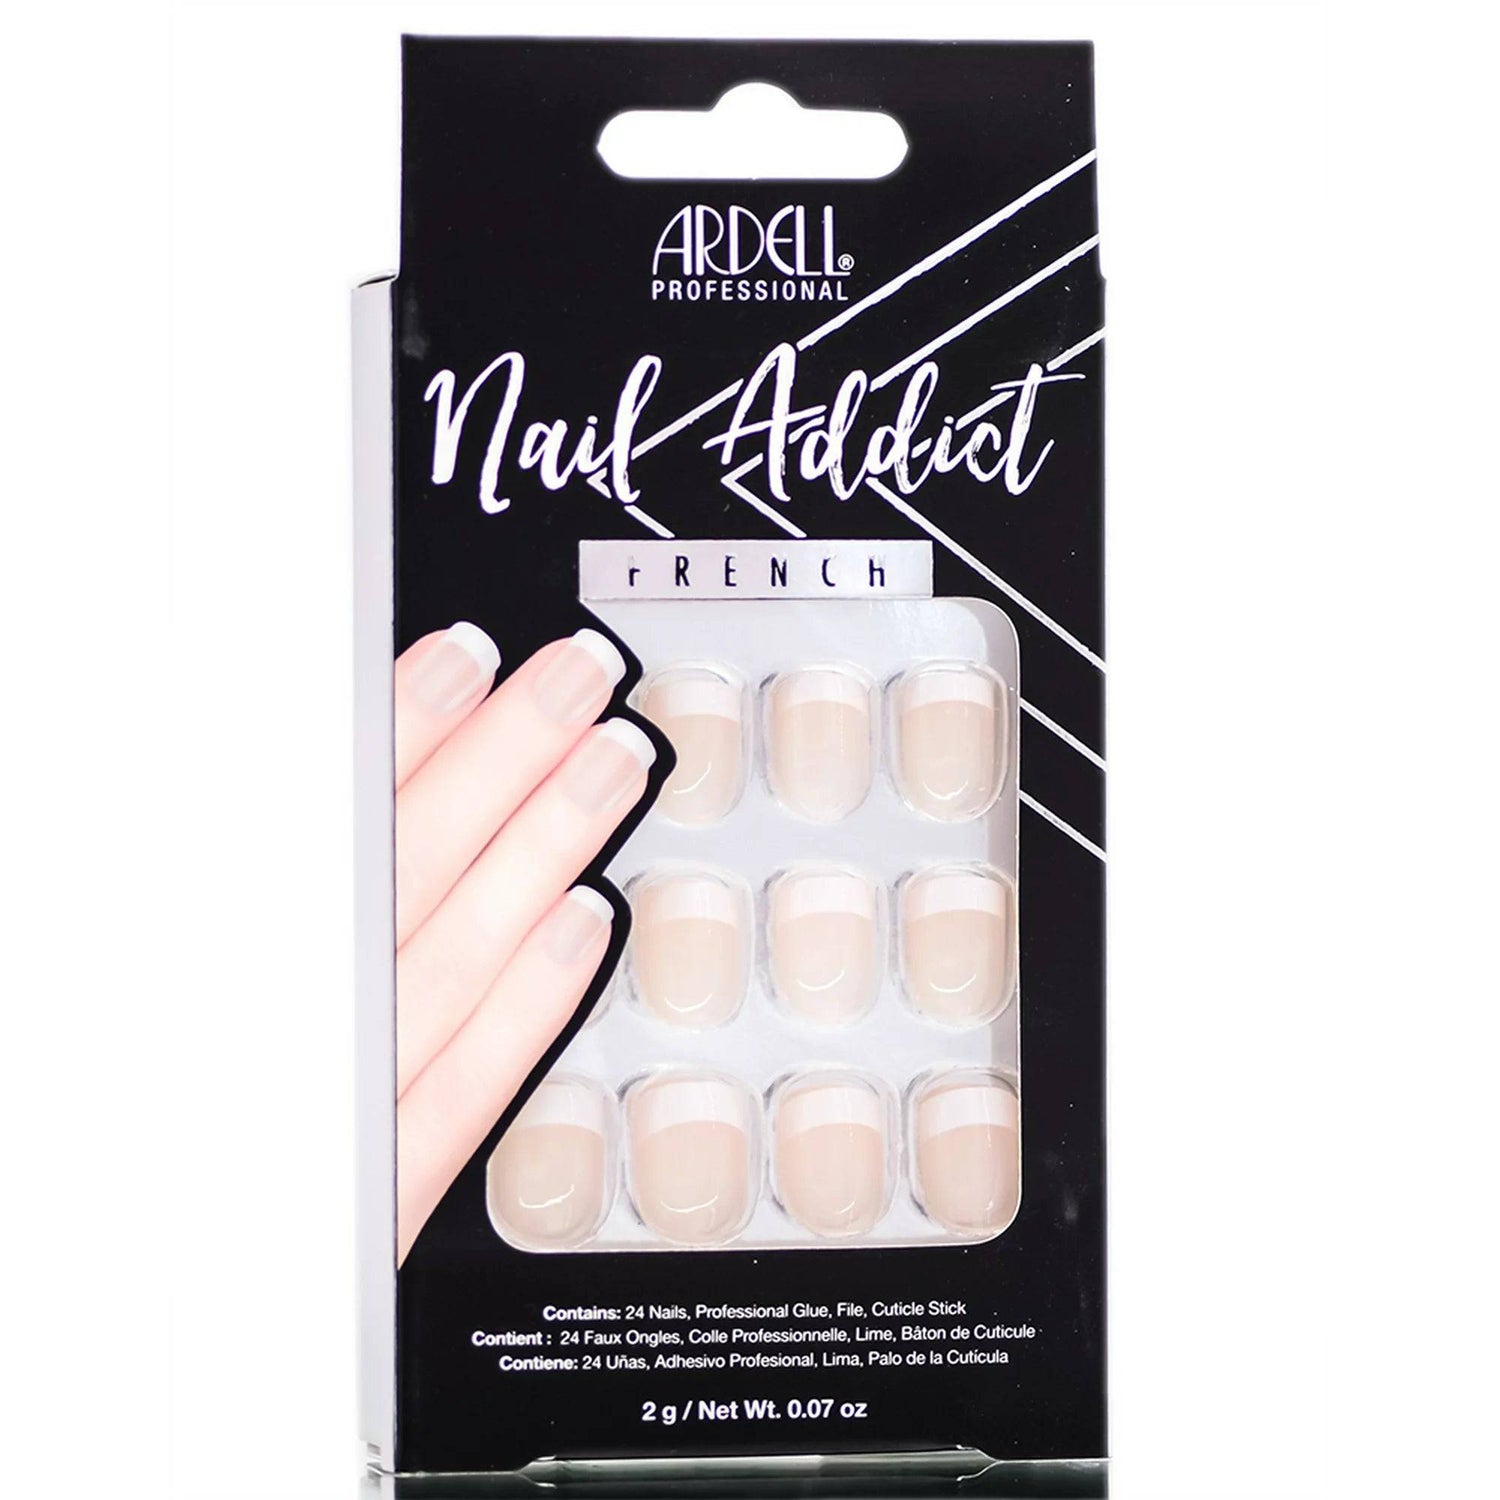 Ardell Nail Addict Premium Artificial Nail Set - VIP Extensions